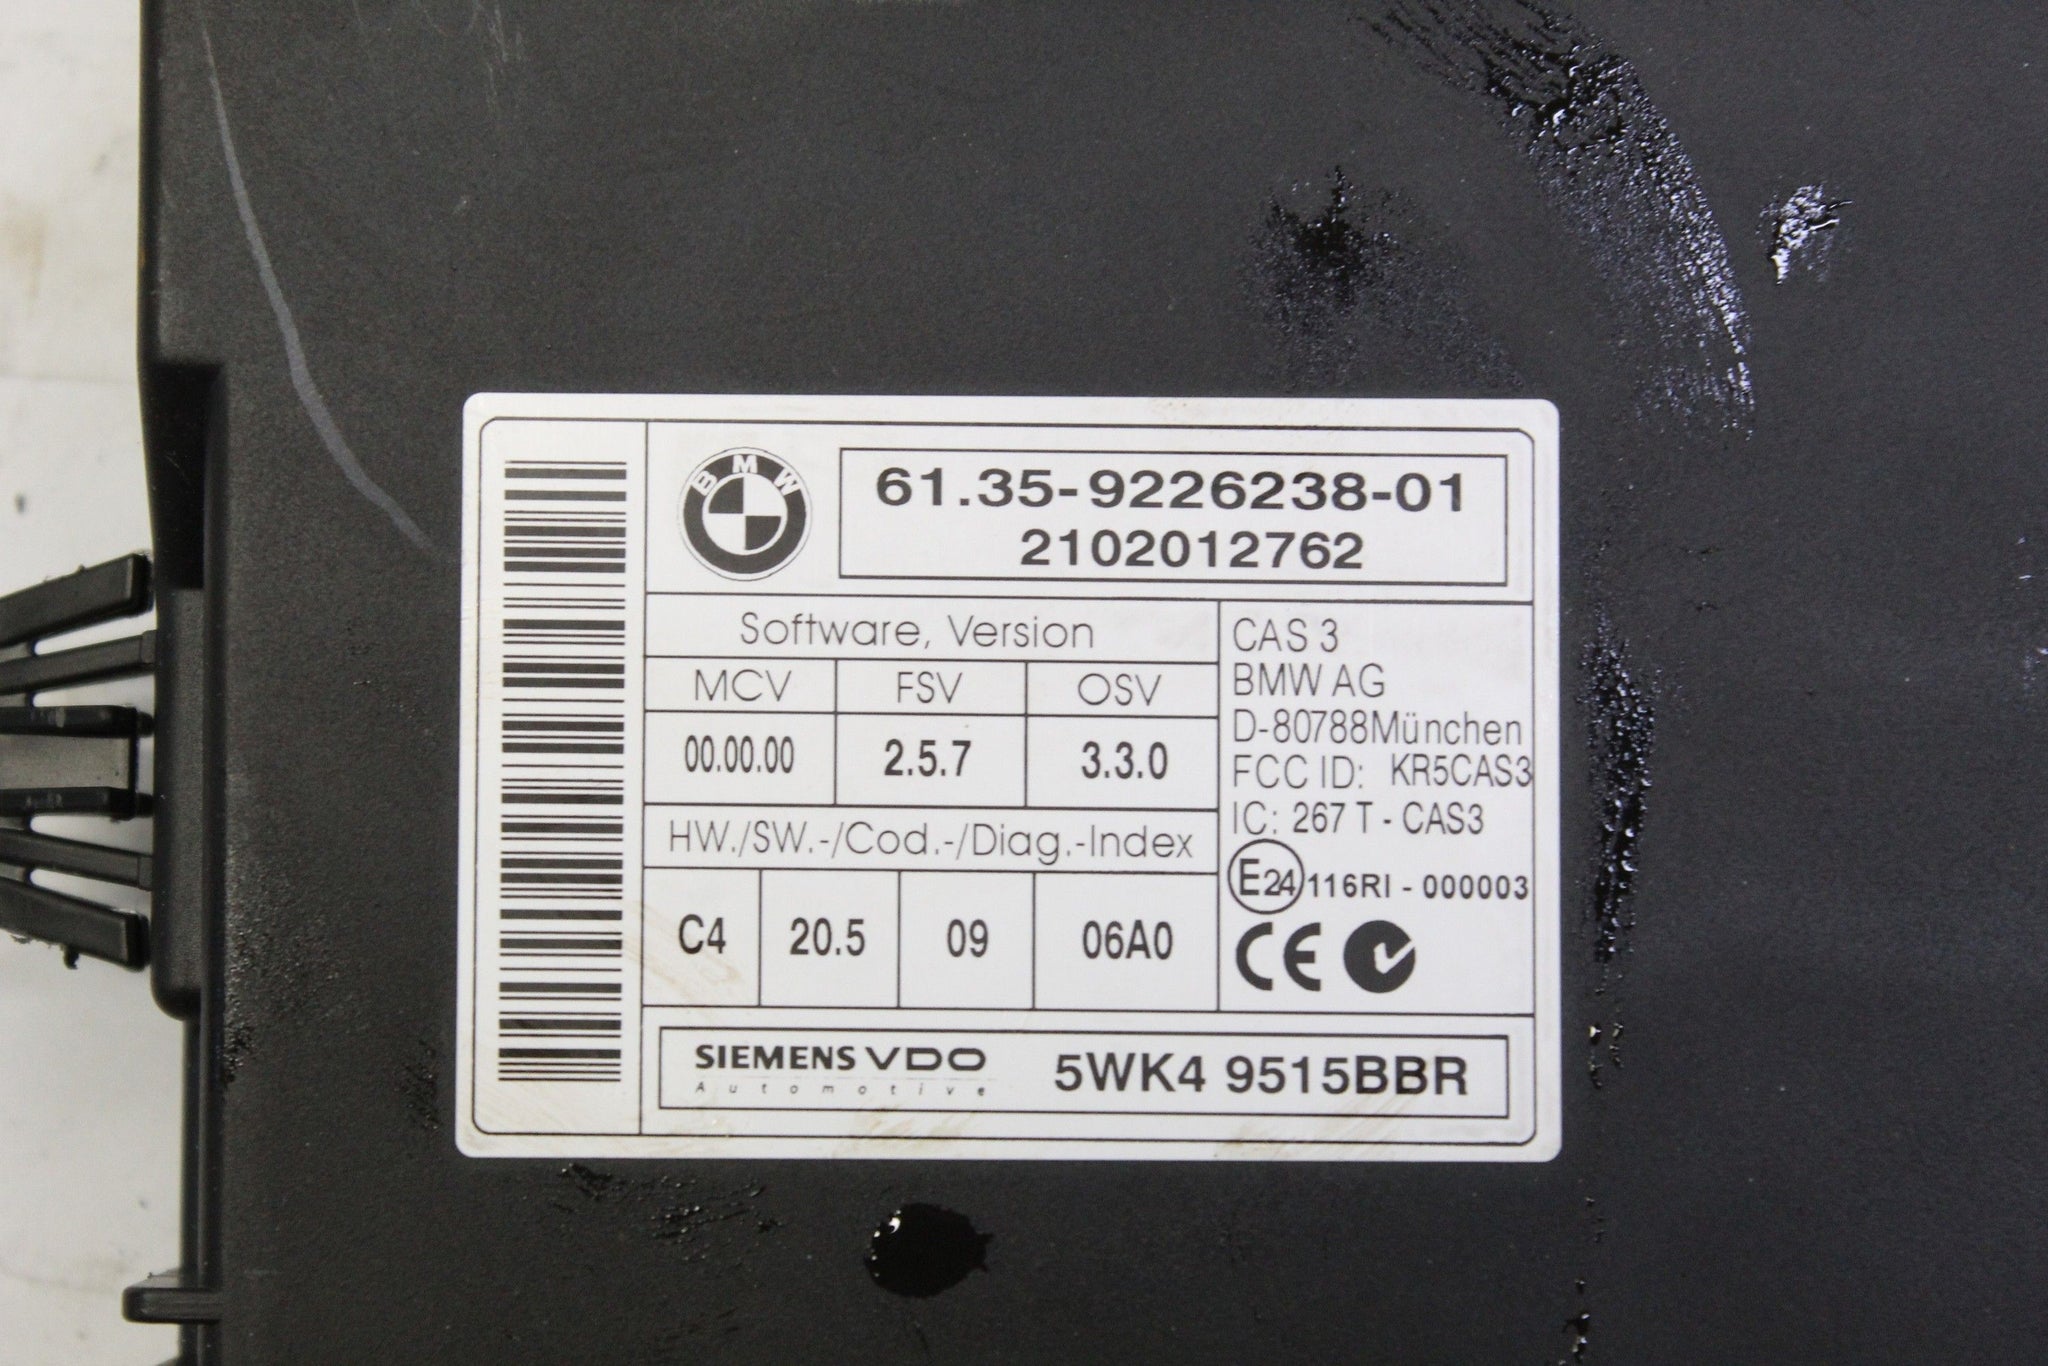 2010 BMW 1 Series E81 CAS3 Control Module 9226238